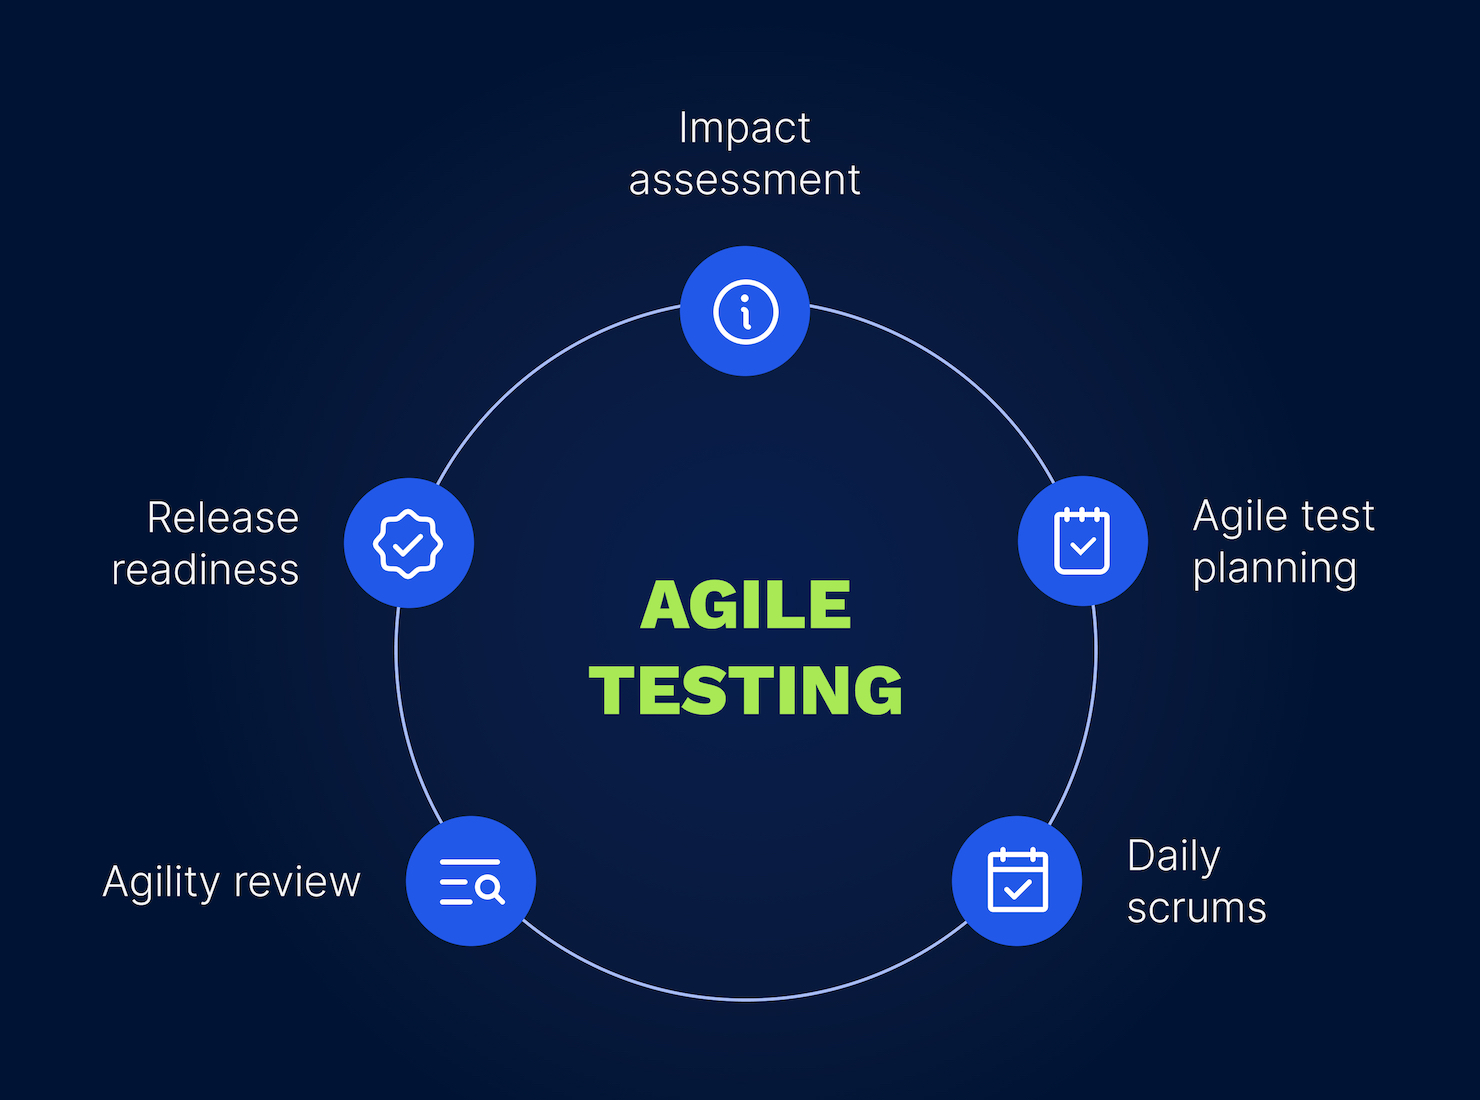 Agile testing life cycle